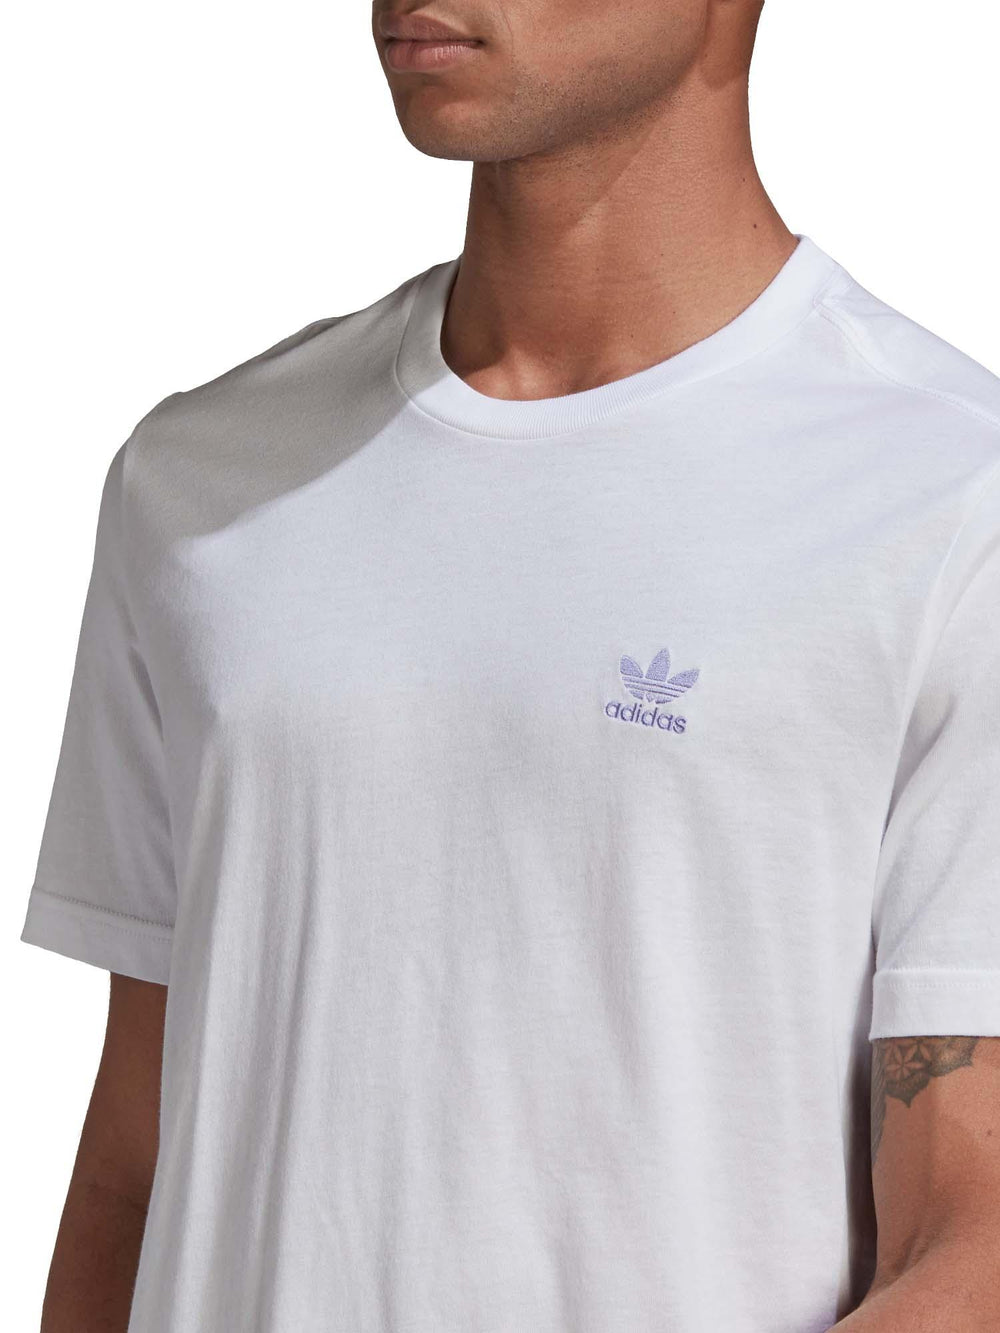 Adidas Off-white Trefoil T-shirt For Men - 3alababak